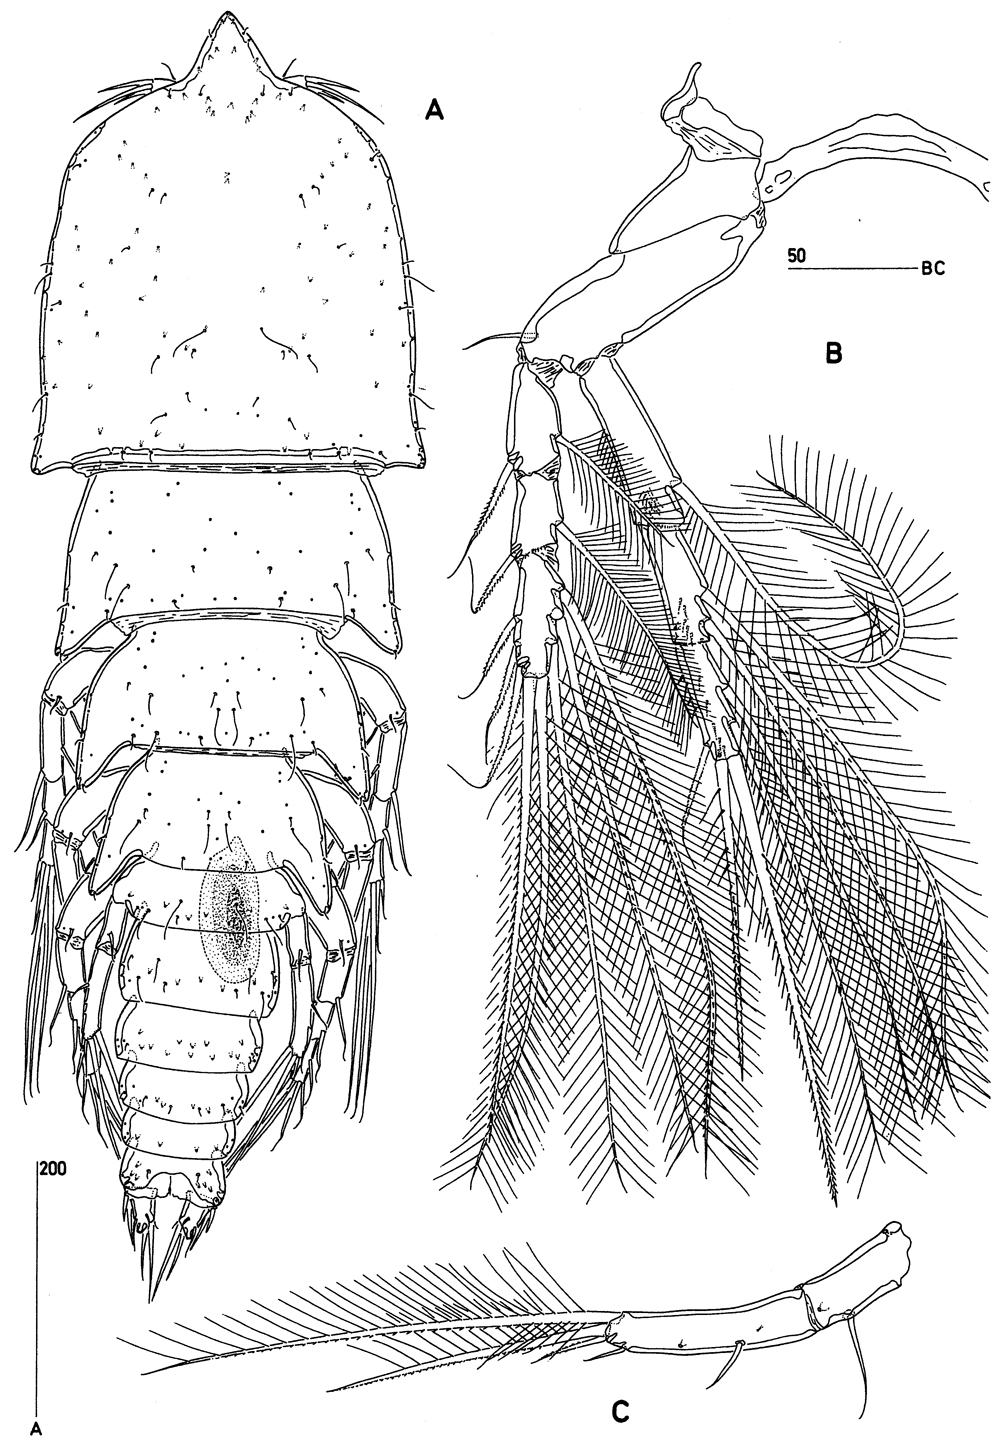 Species Goniopsyllus clausi - Plate 7 of morphological figures